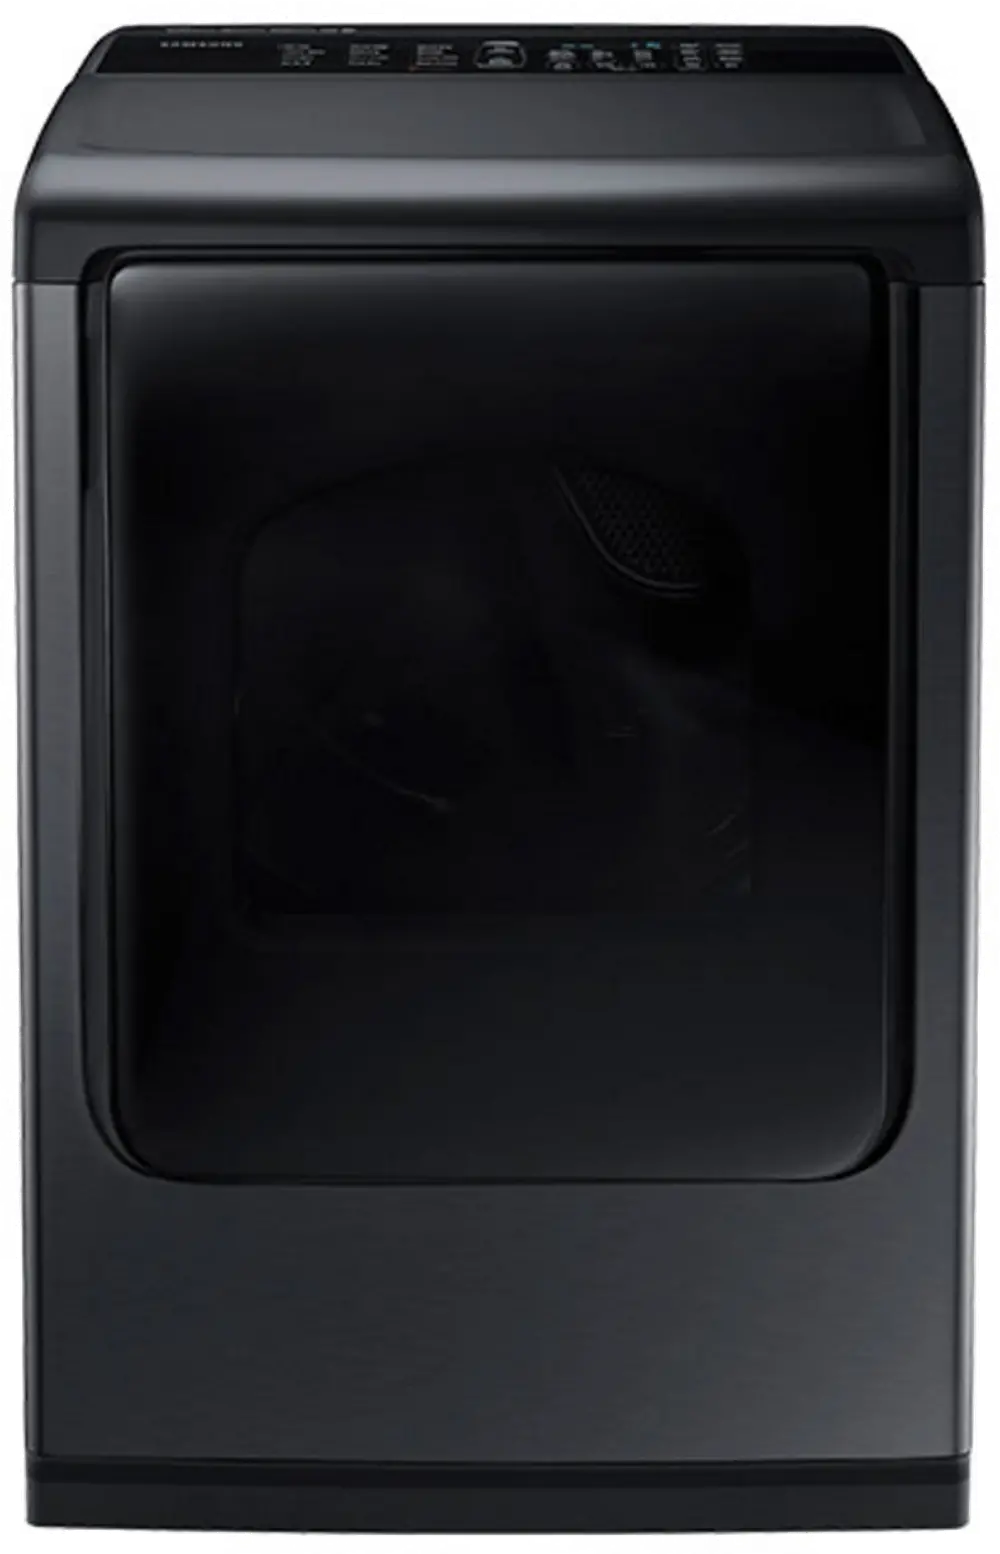 DV50K8600EV Samsung Black 7.4 Cu. Ft. Electric Dryer-1